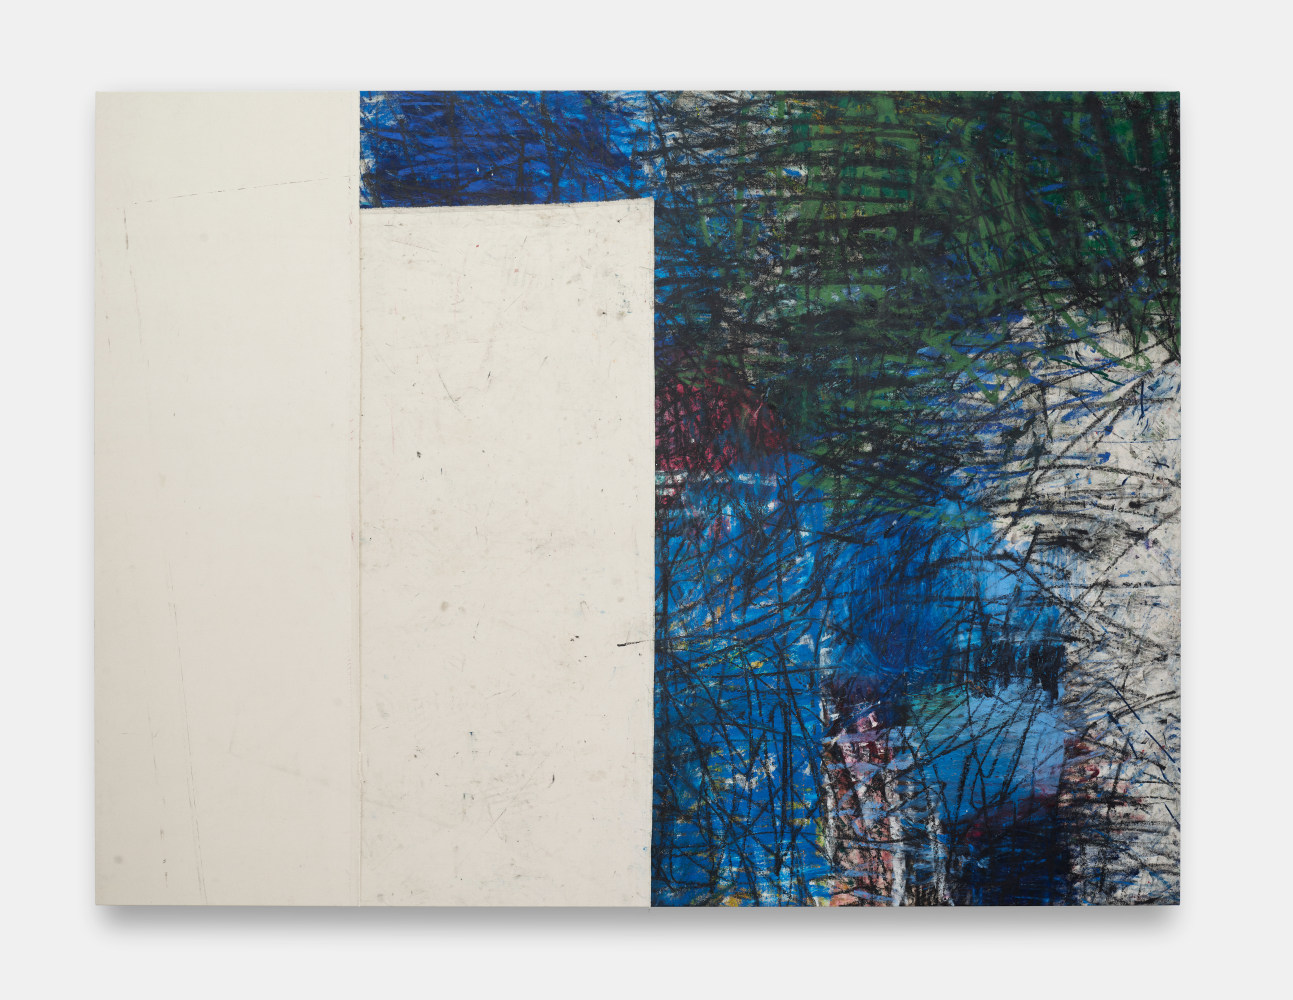 Dan&amp;eacute; Estes
Untitled IV, 2023
Oil, thread and earth on canvas
87h x 116w x 1.50d in
220.98h x 294.64w x 3.81d cm